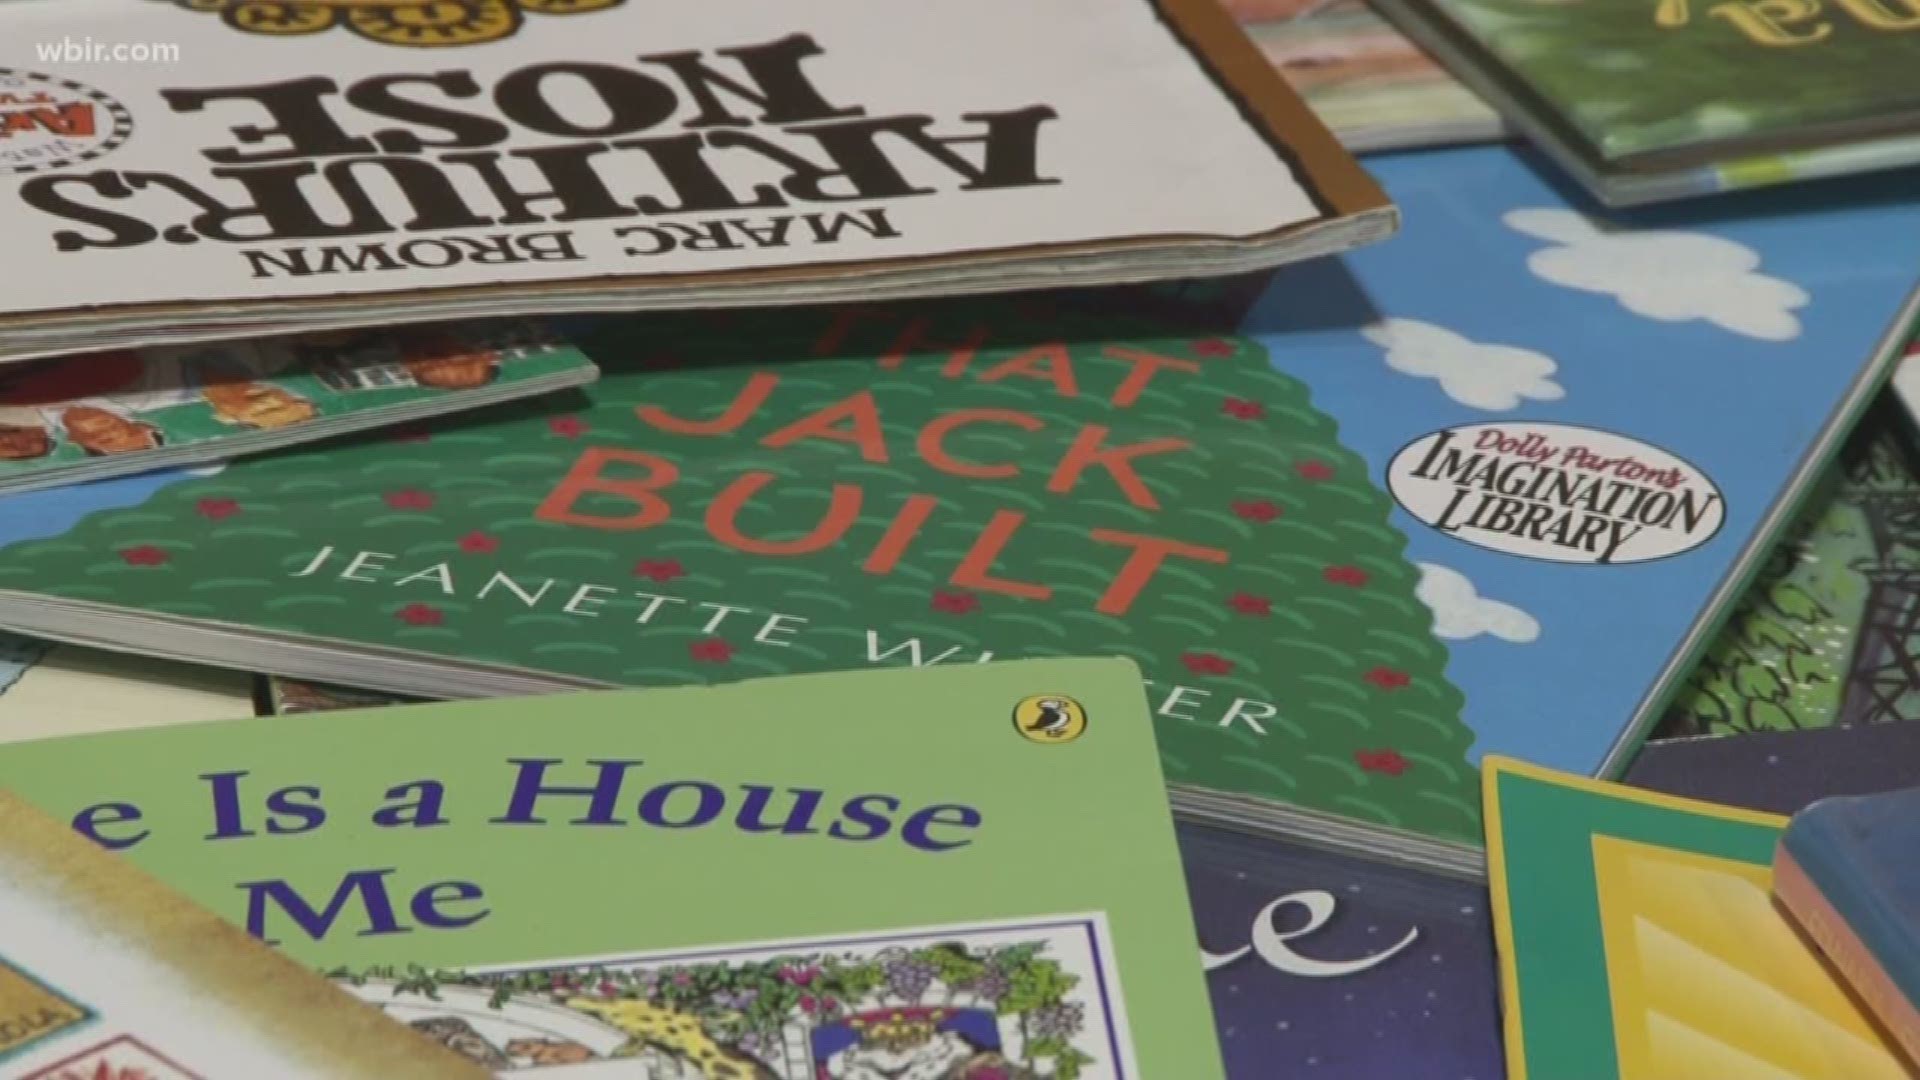 Book giveaway captivates kindergarten students